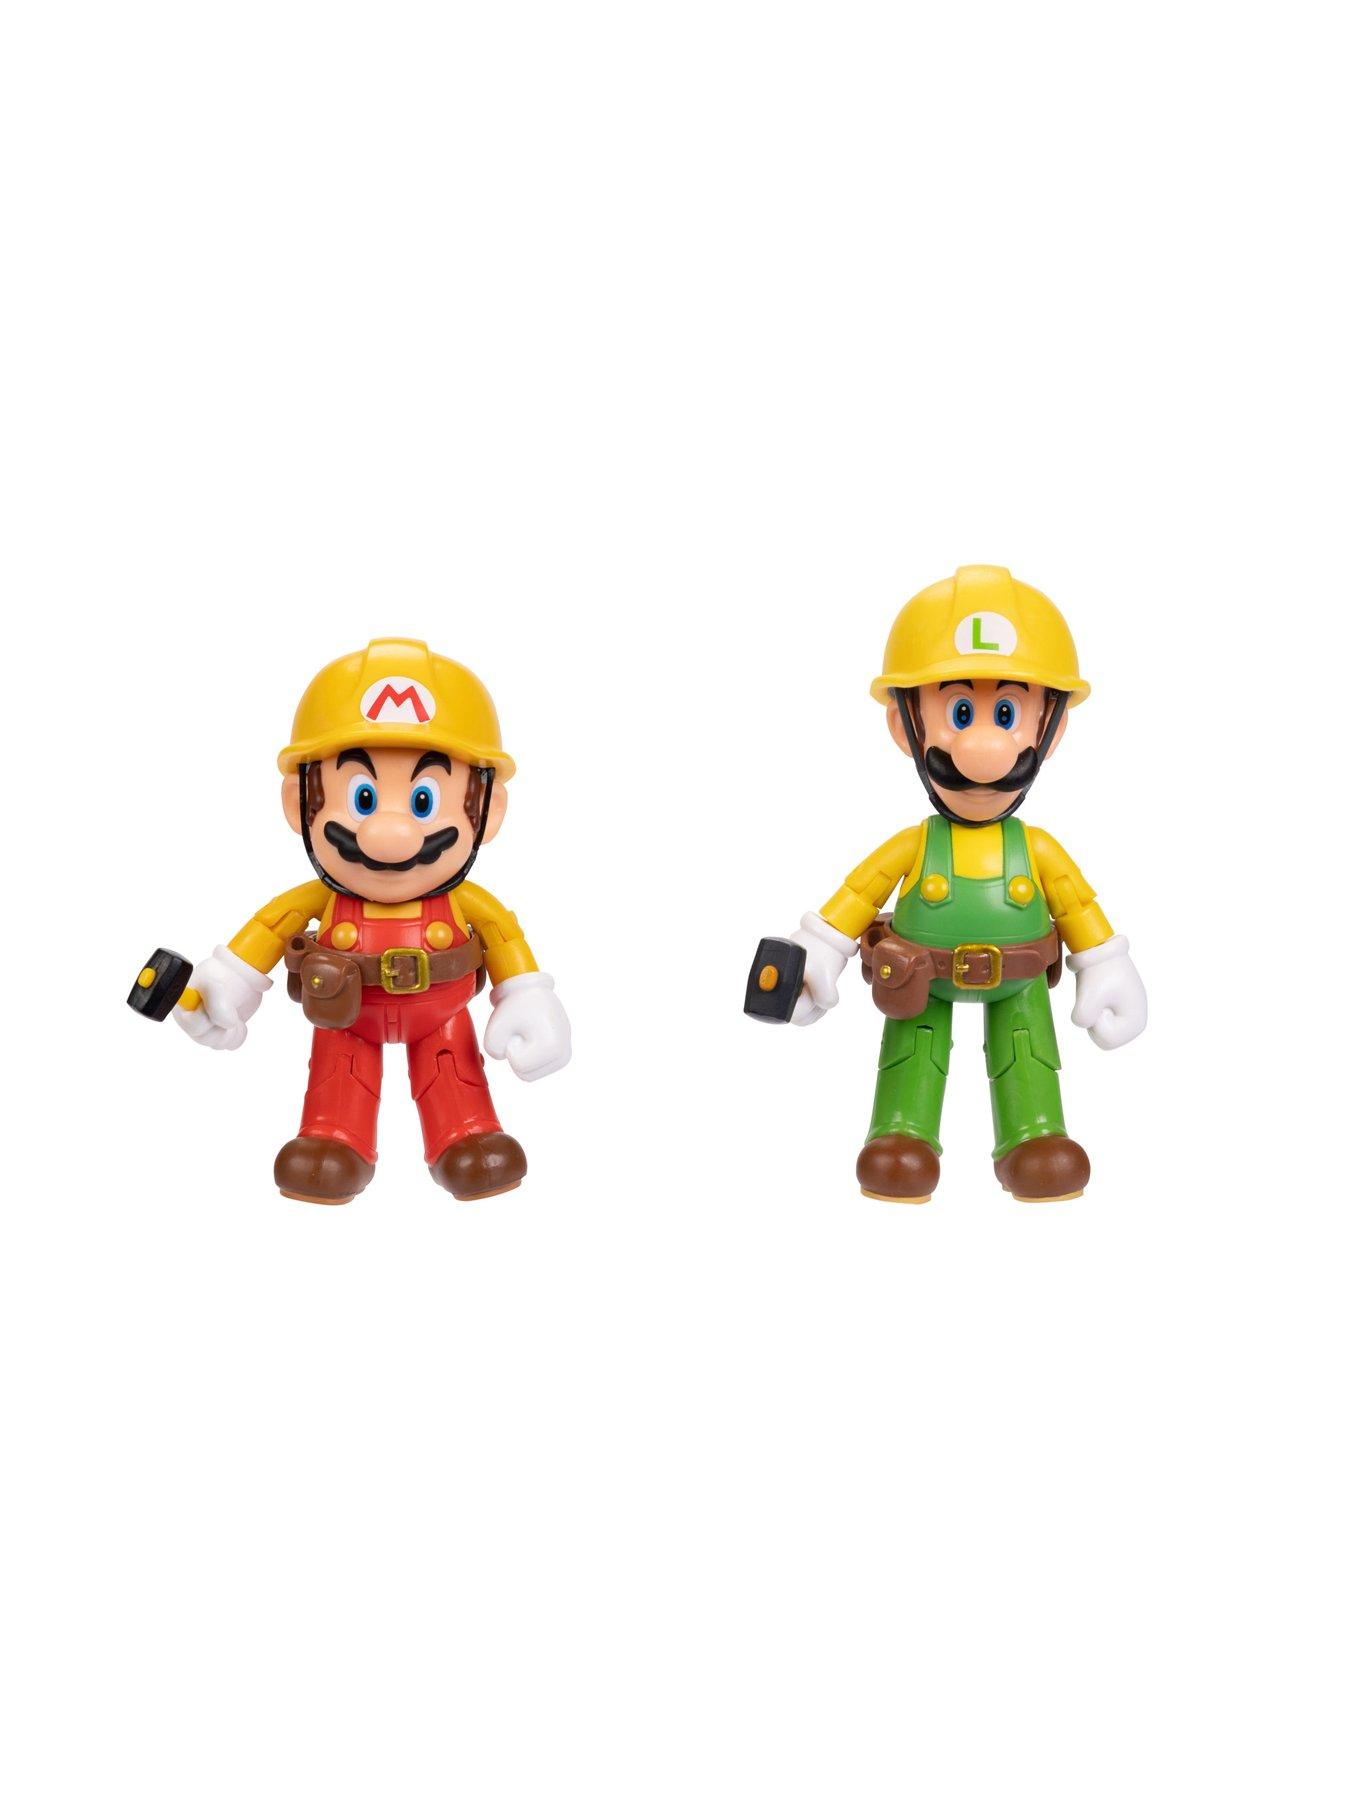 Super Mario Maker 2 - The Cutting Room Floor